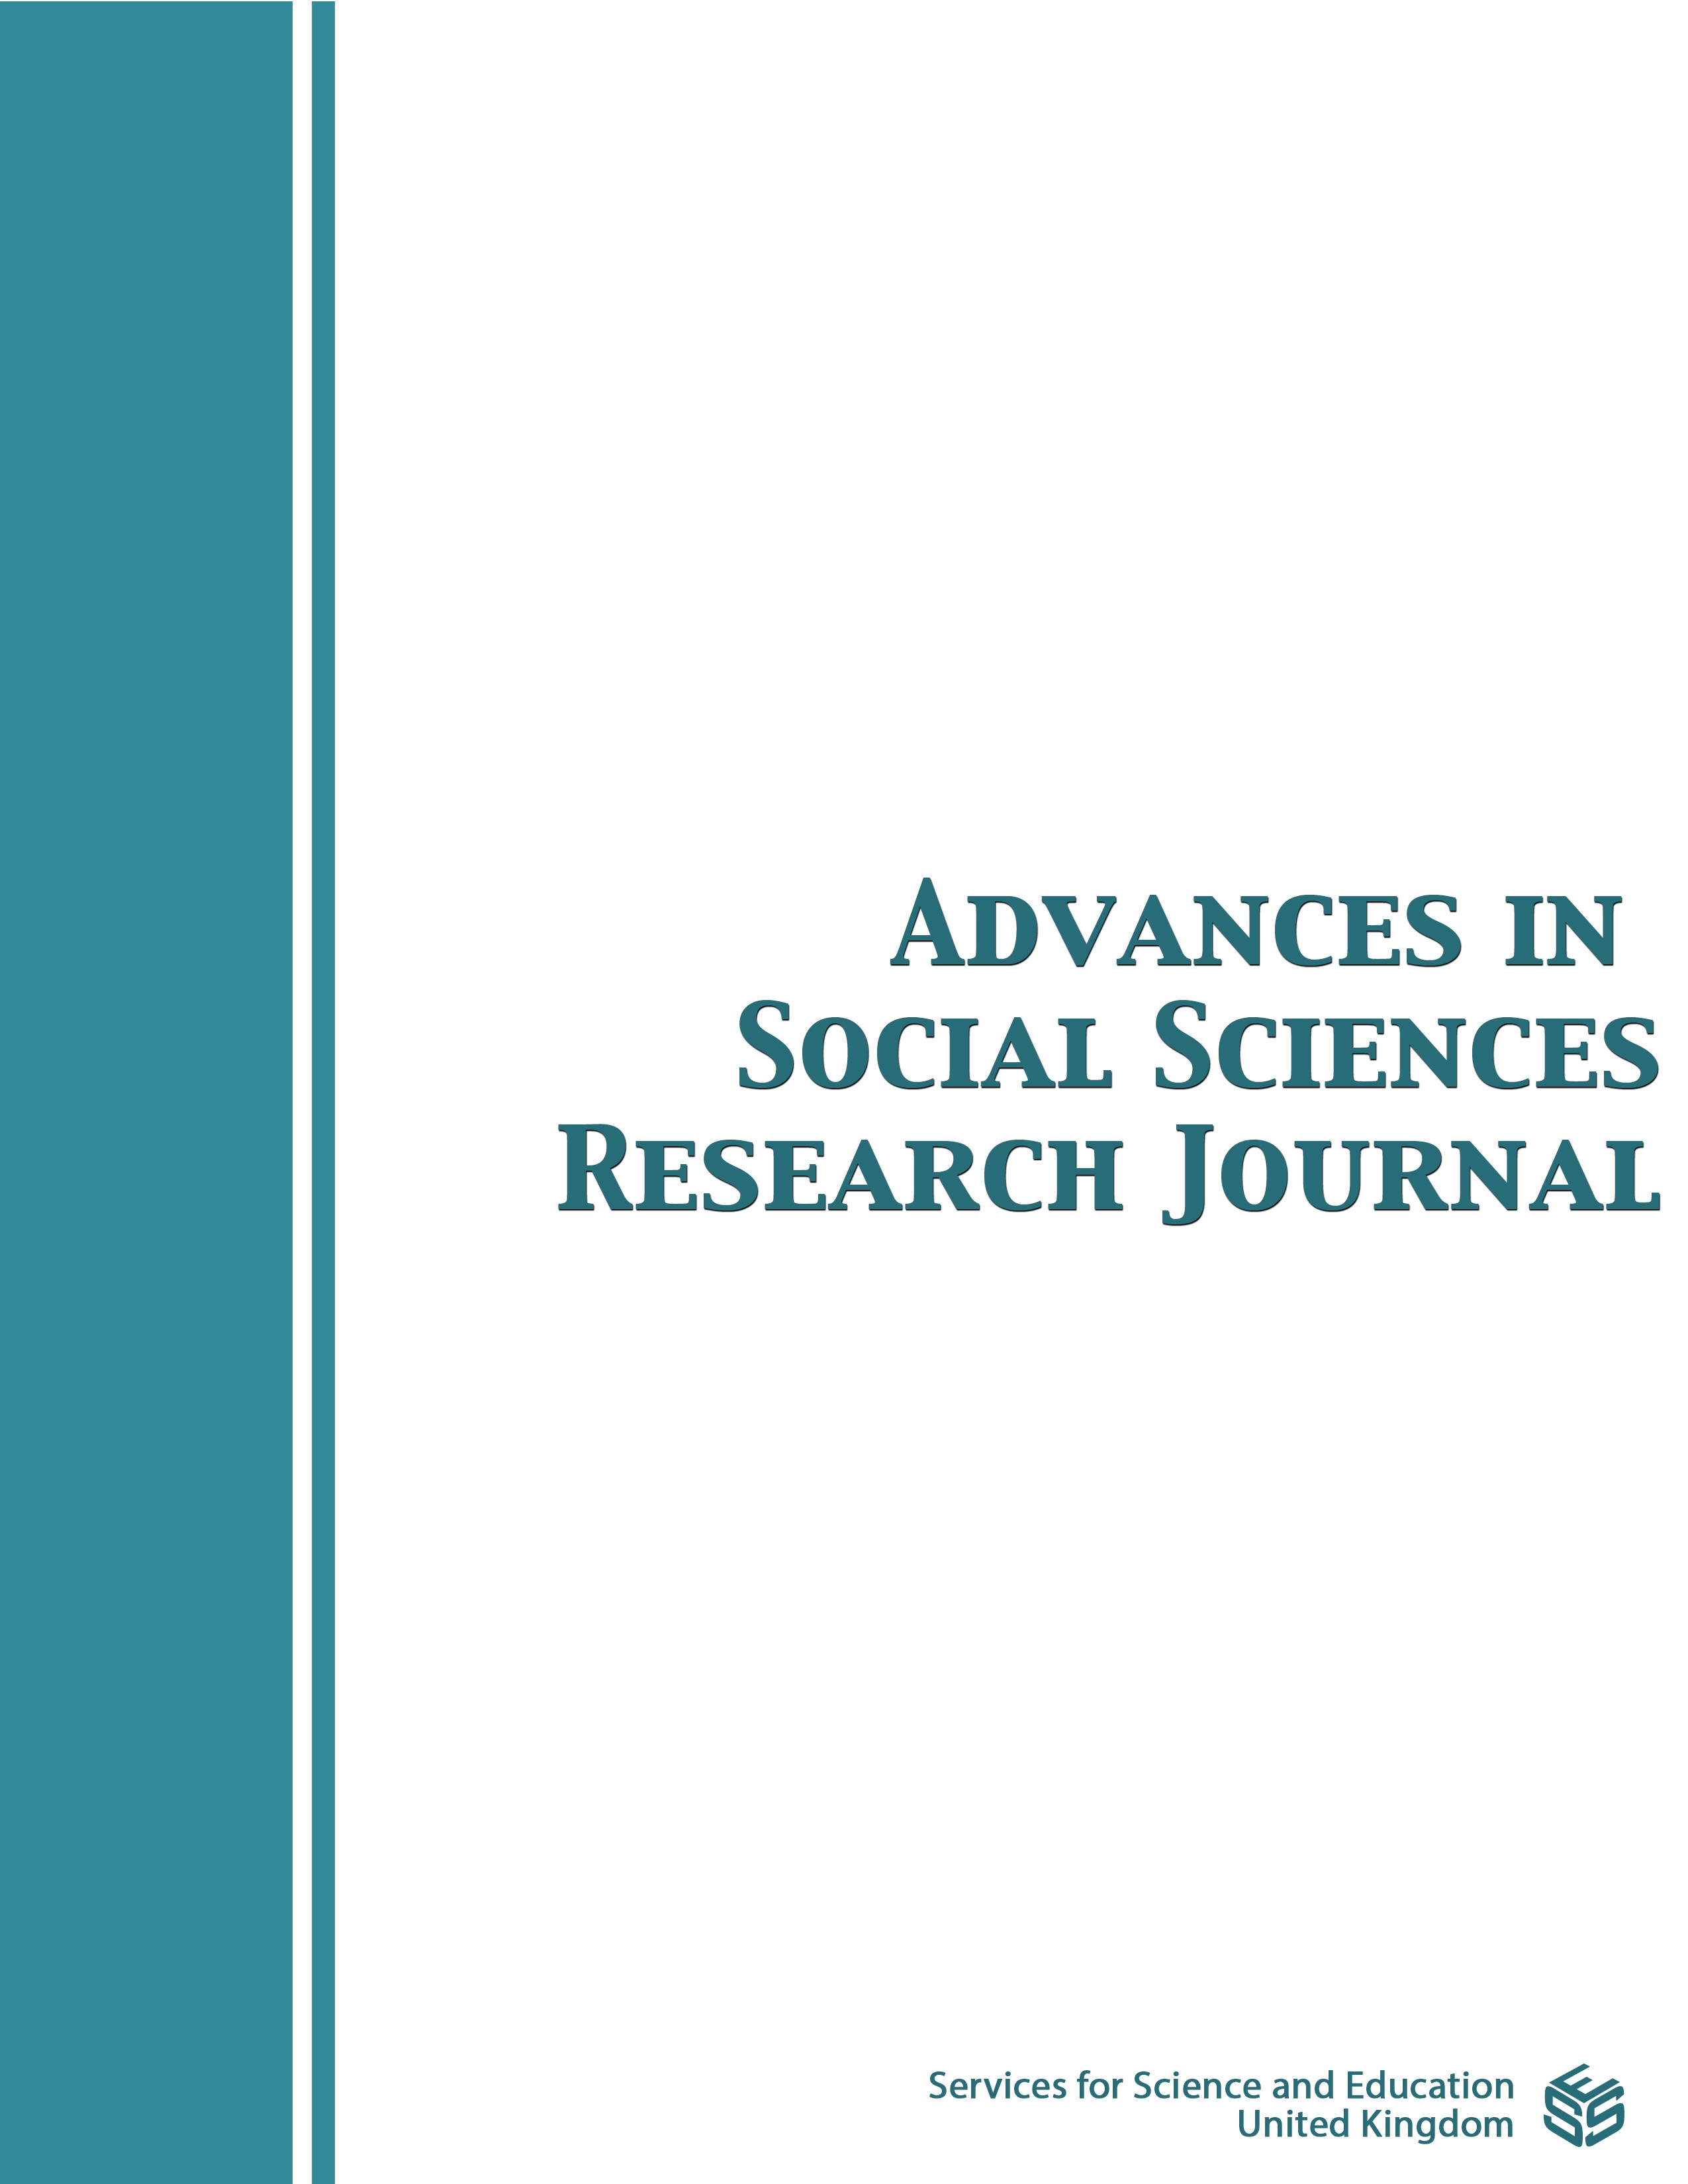 					View Vol. 8 No. 8 (2021): Advances in Social Sciences Research Journal 
				